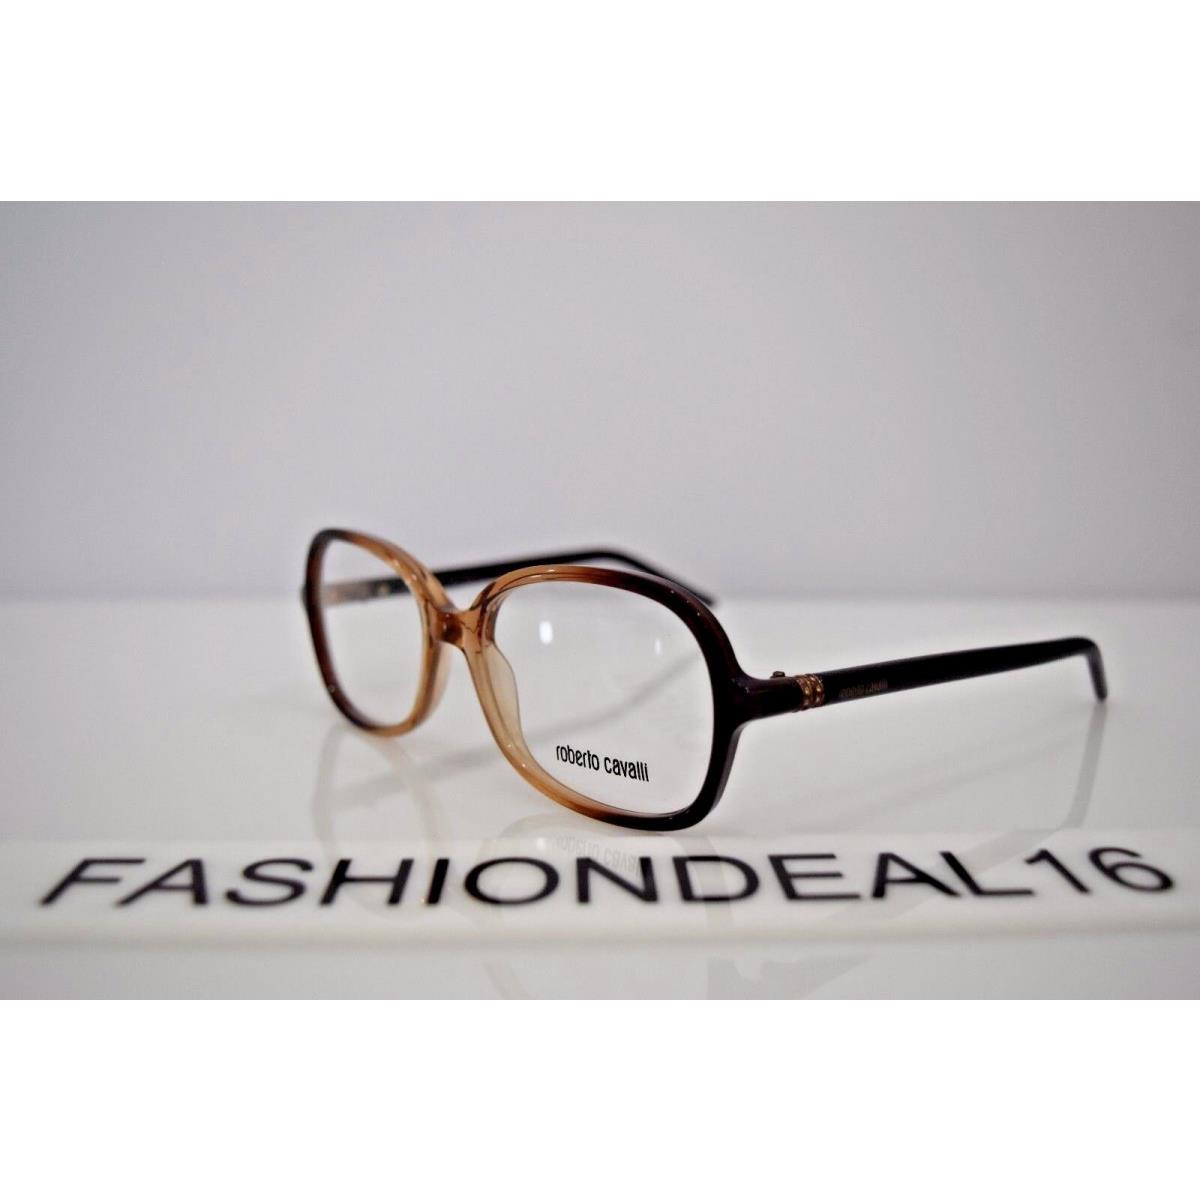 Roberto Cavalli eyeglasses  - Brown/Beige Translucent Frame 4